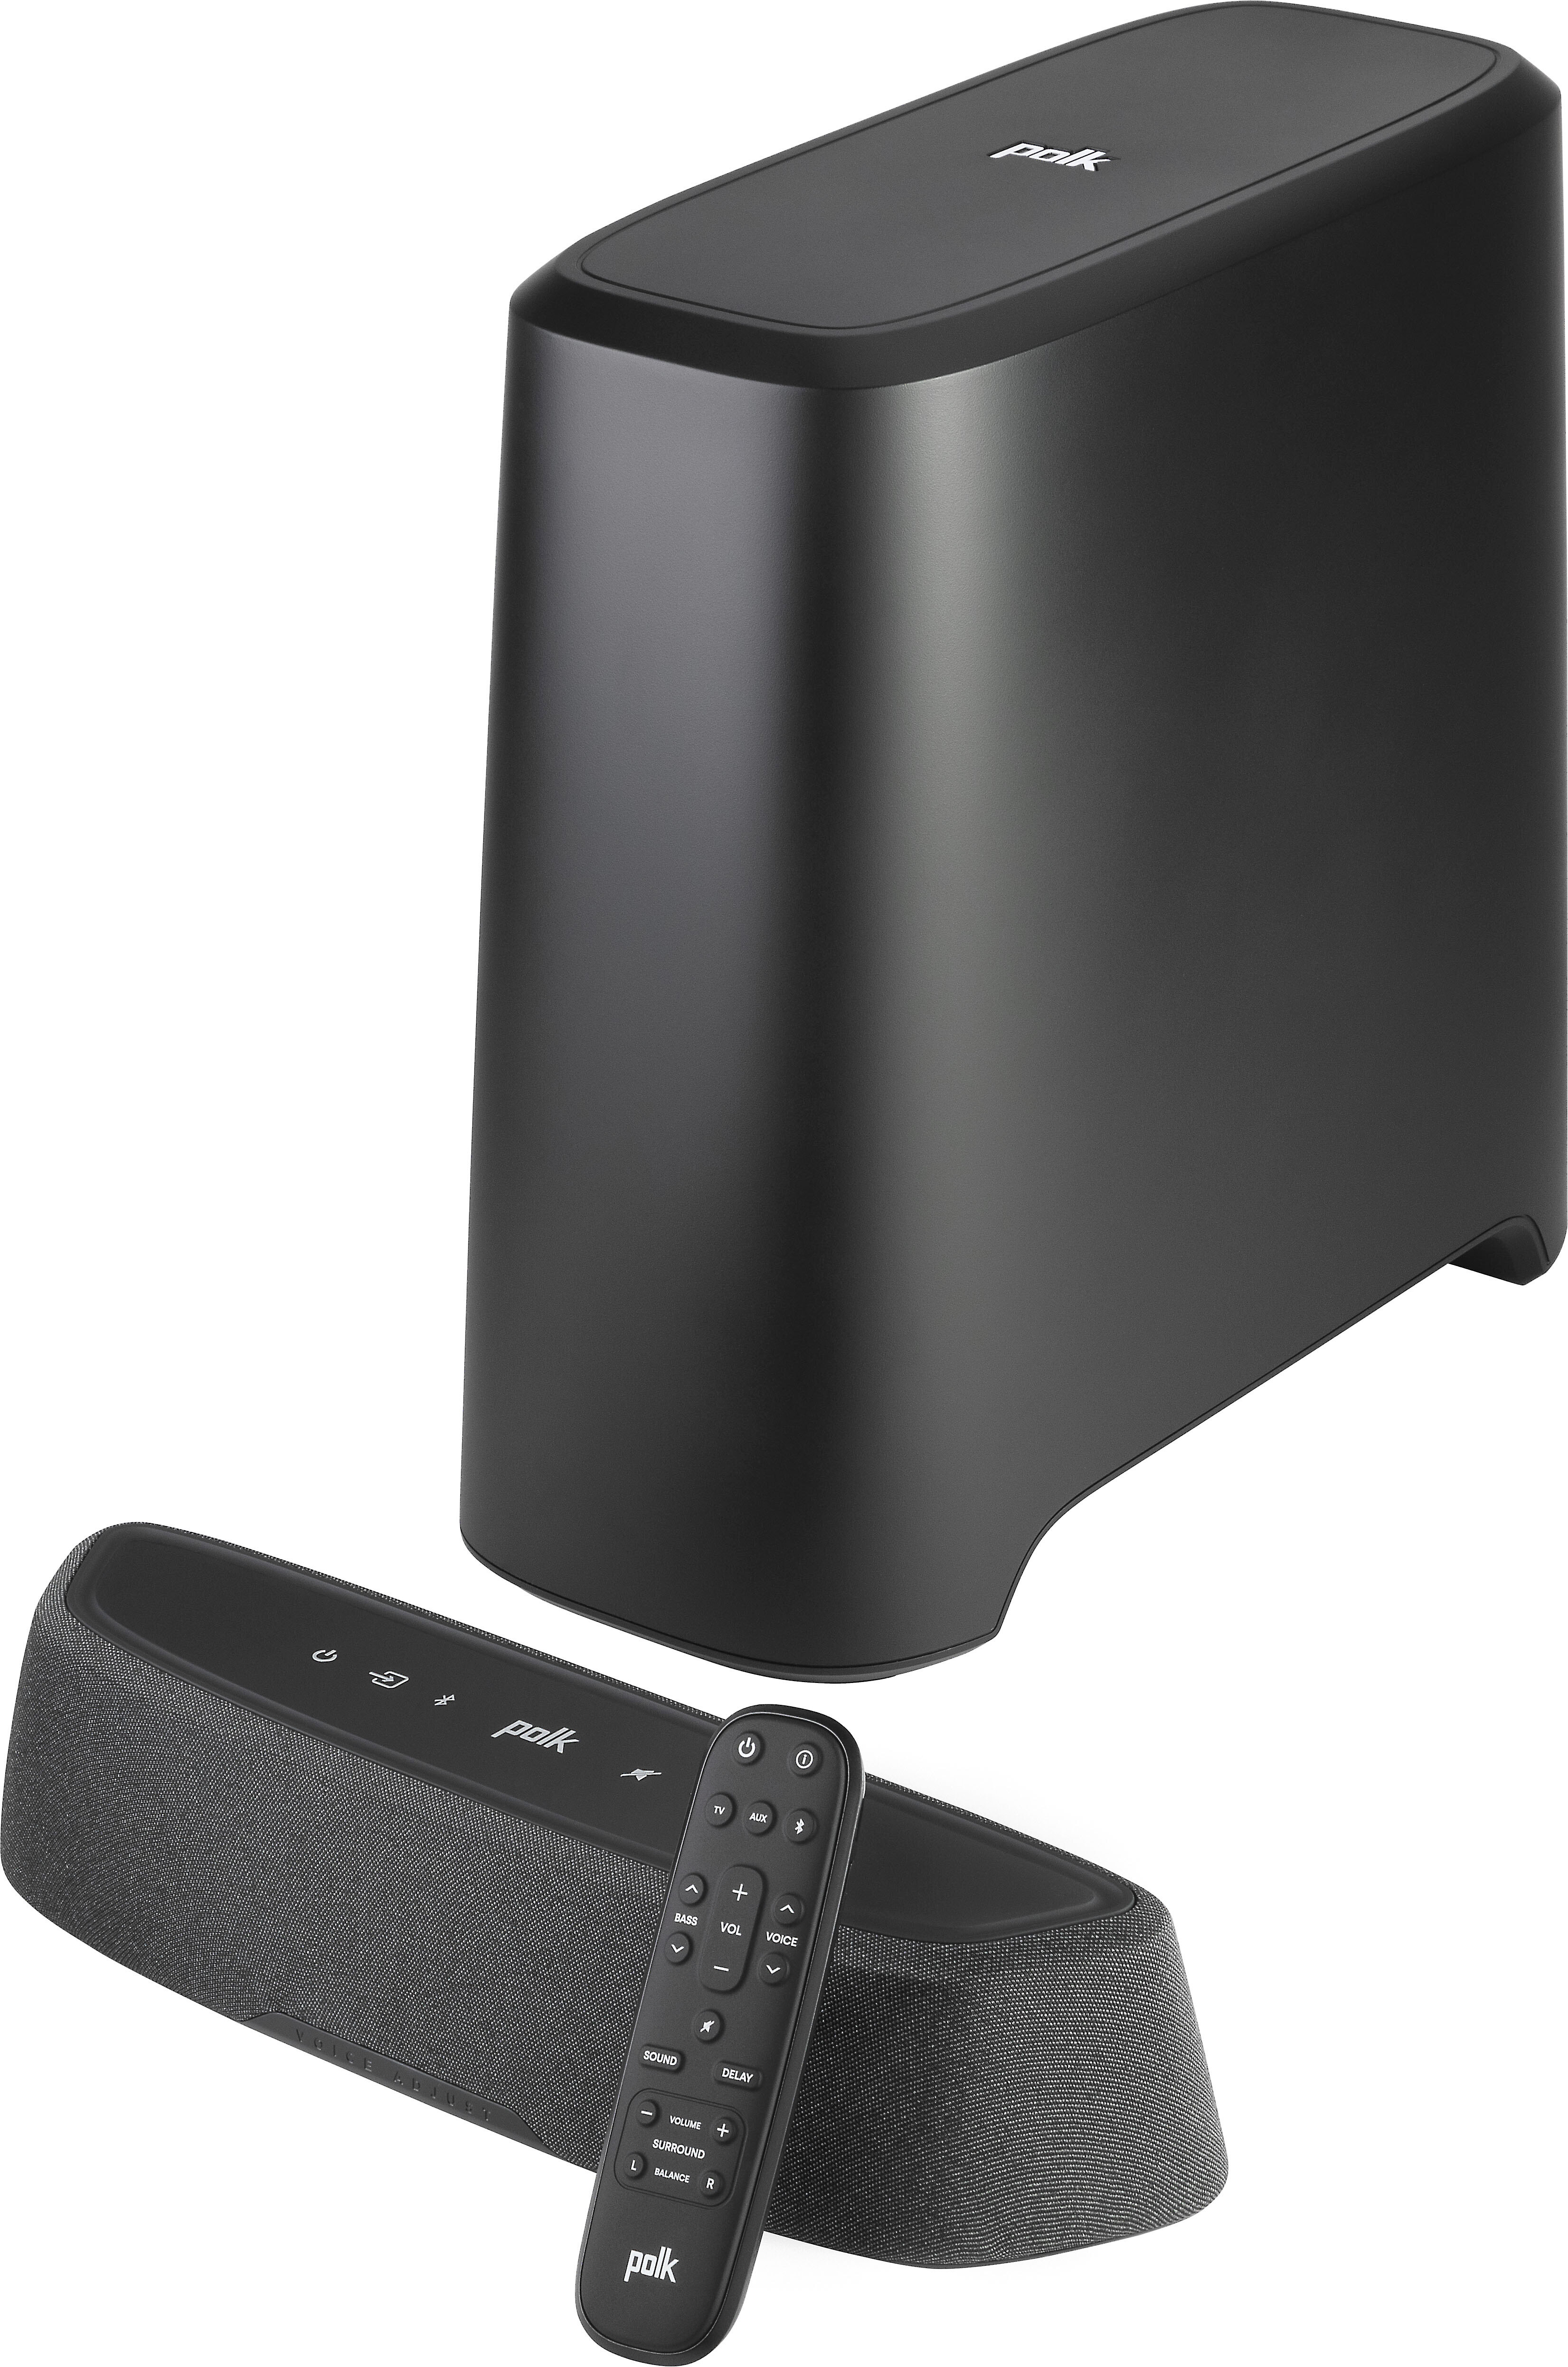 Buy Polk Audio Signa S2 Dolby Digital with HDMI ARC with Wireless Subwoofer  120 W Bluetooth Soundbar Online from